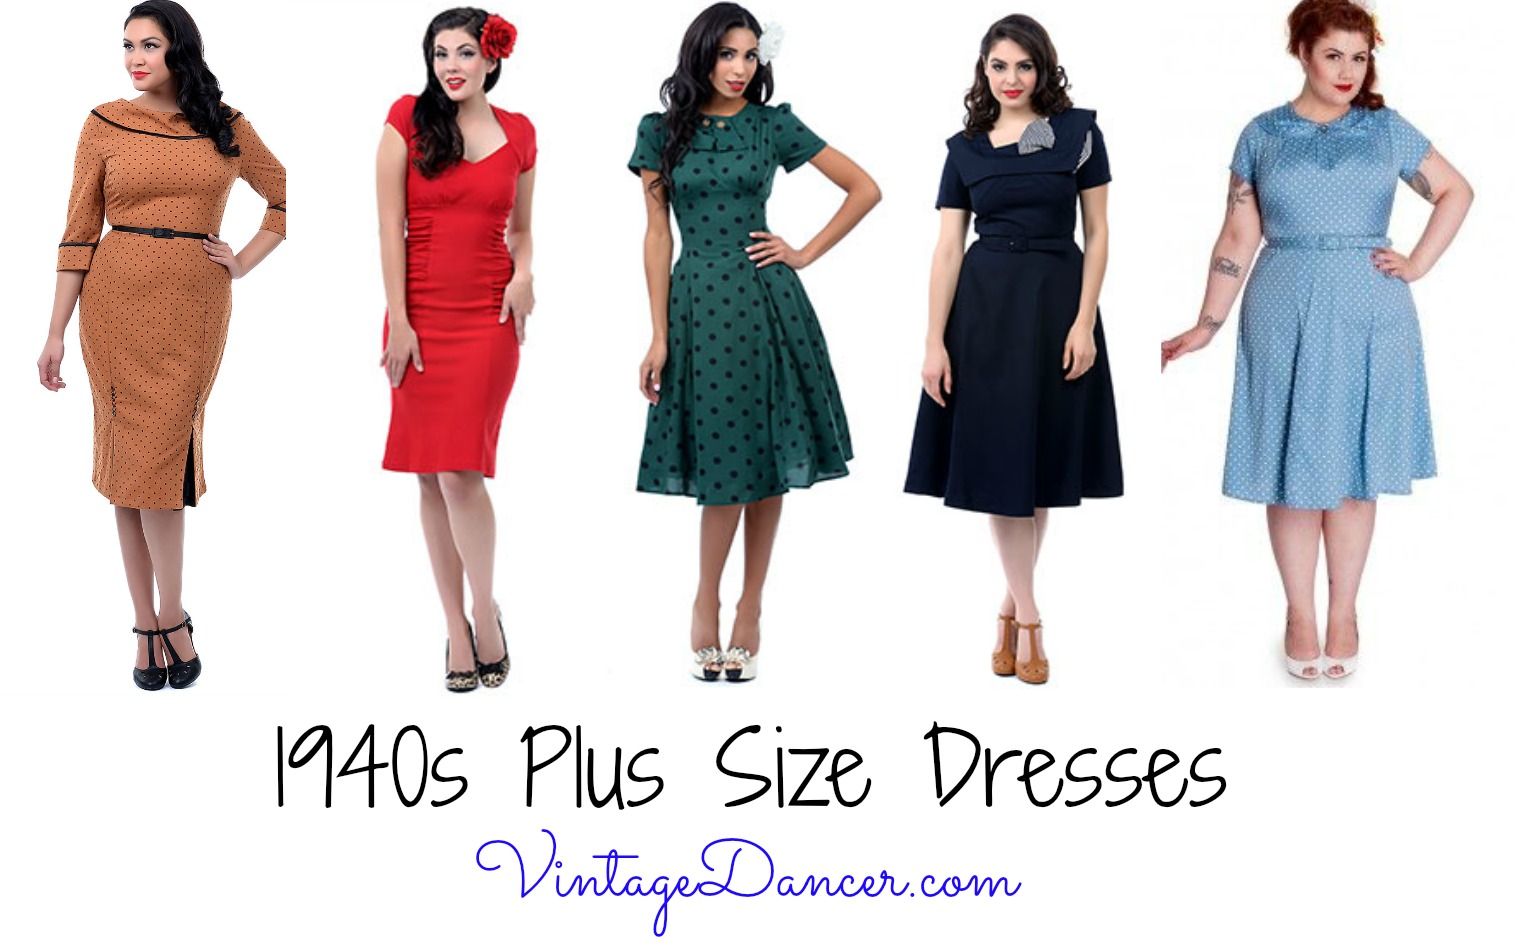 Koncession voldsom Hilsen Vintage Style 1940s Plus Size Dresses